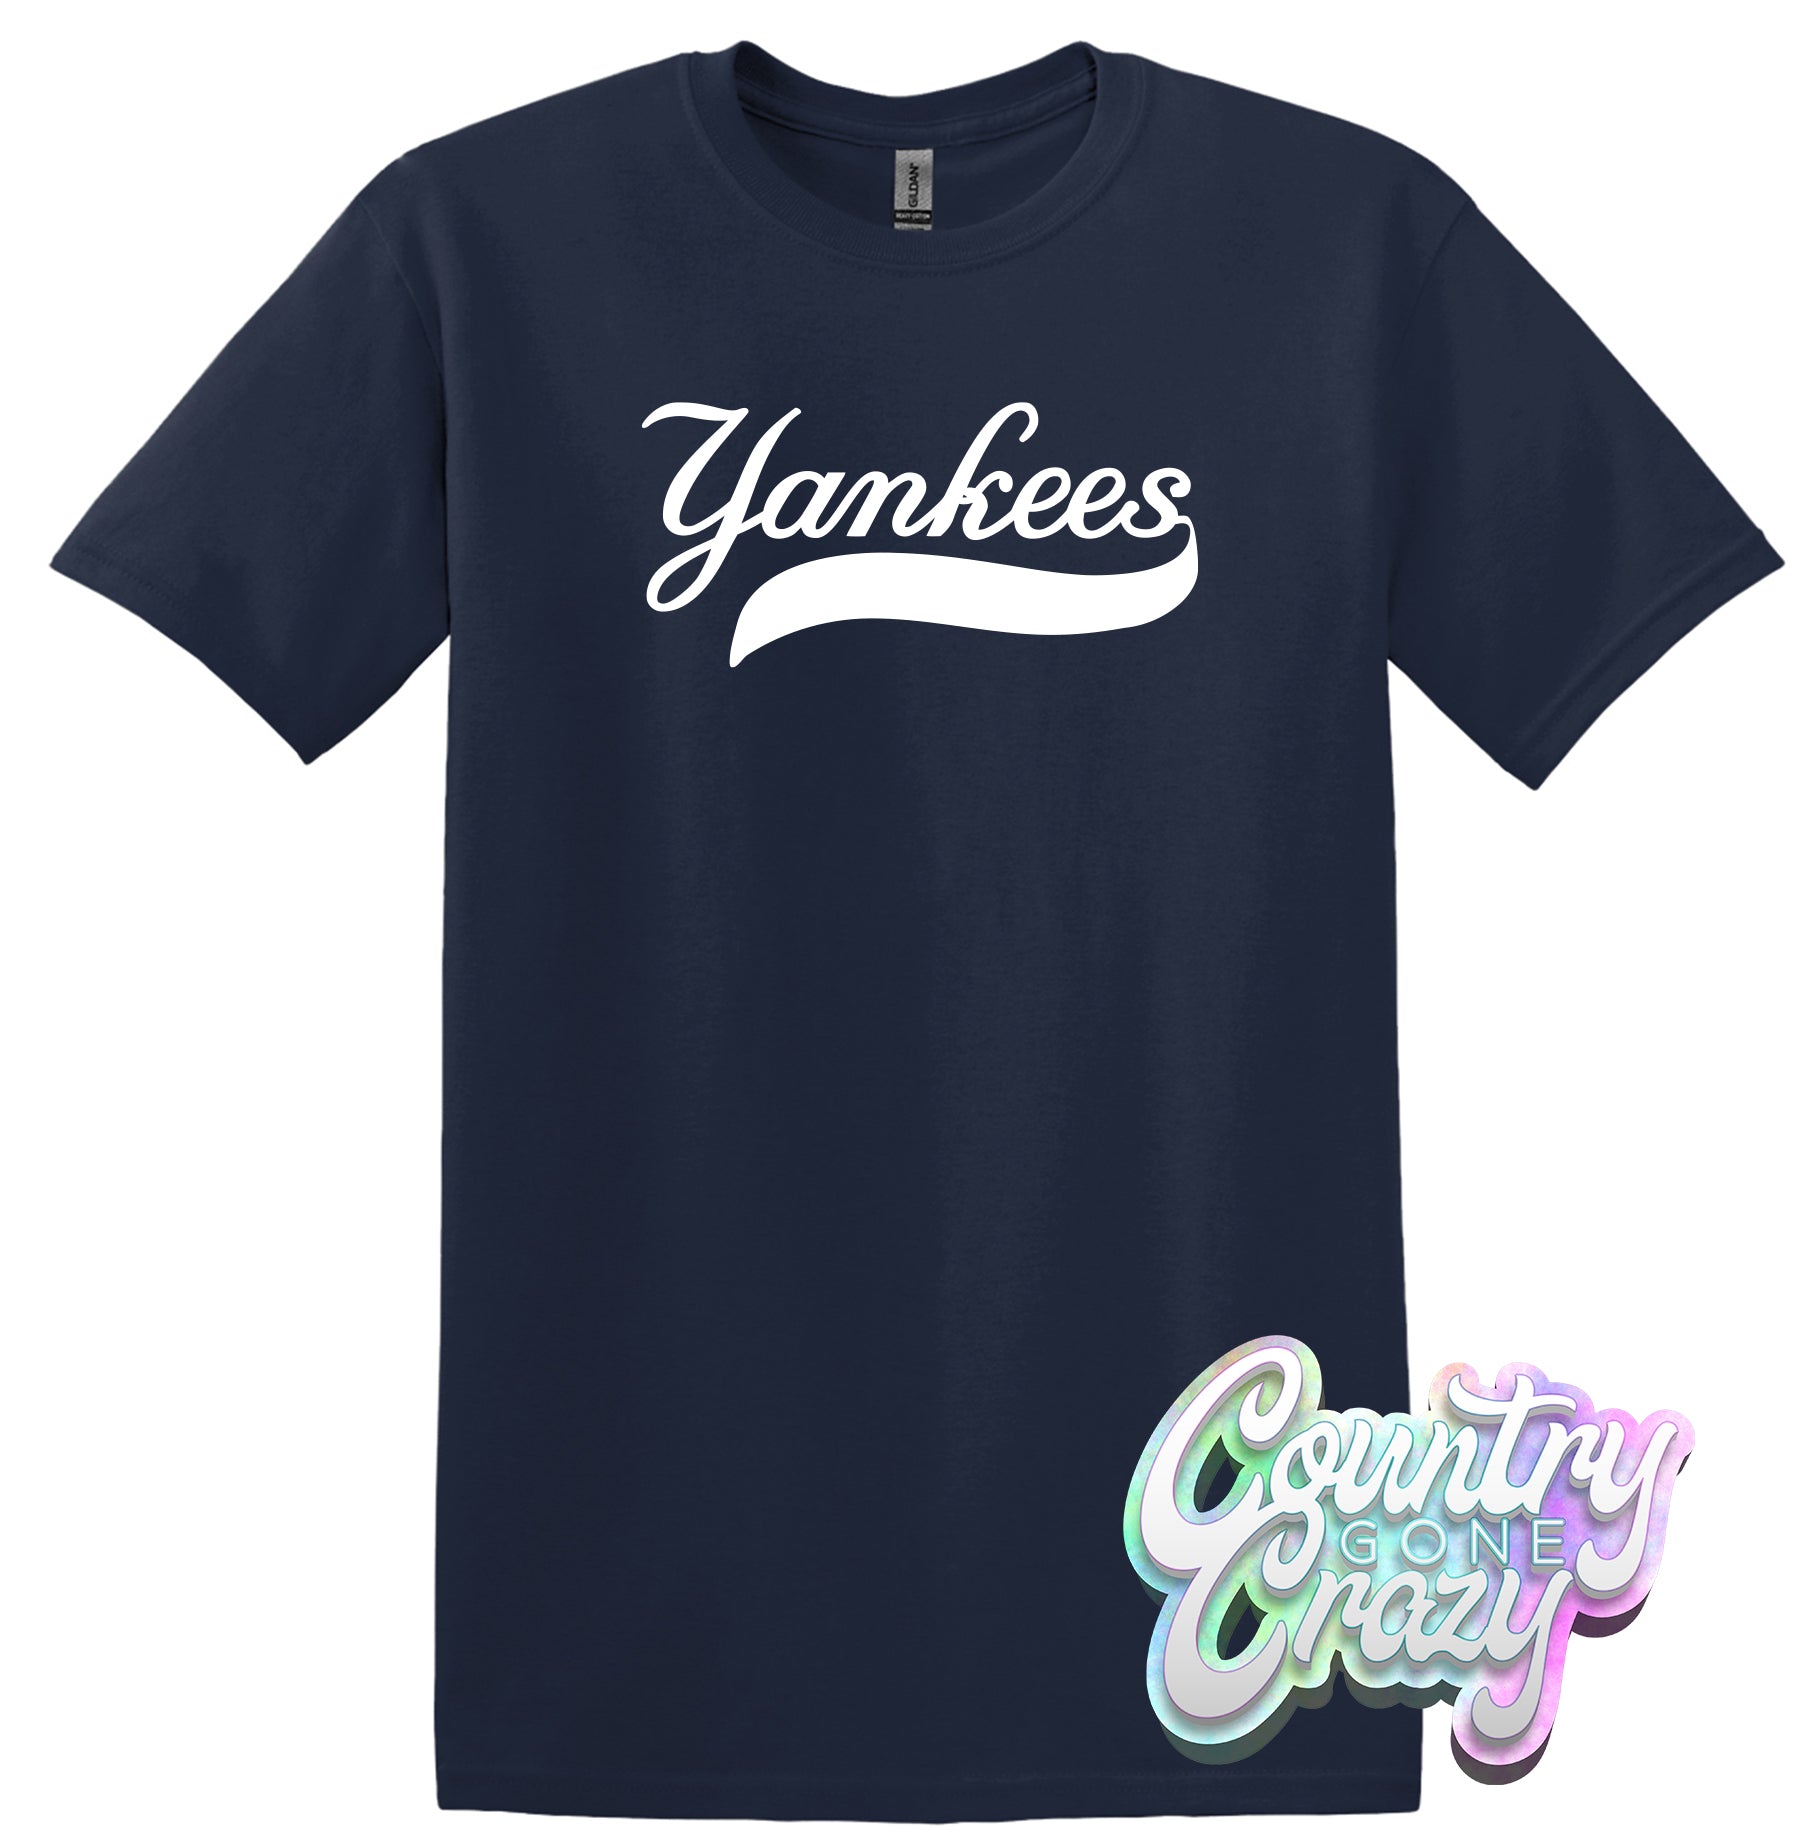  Yankees Shirts